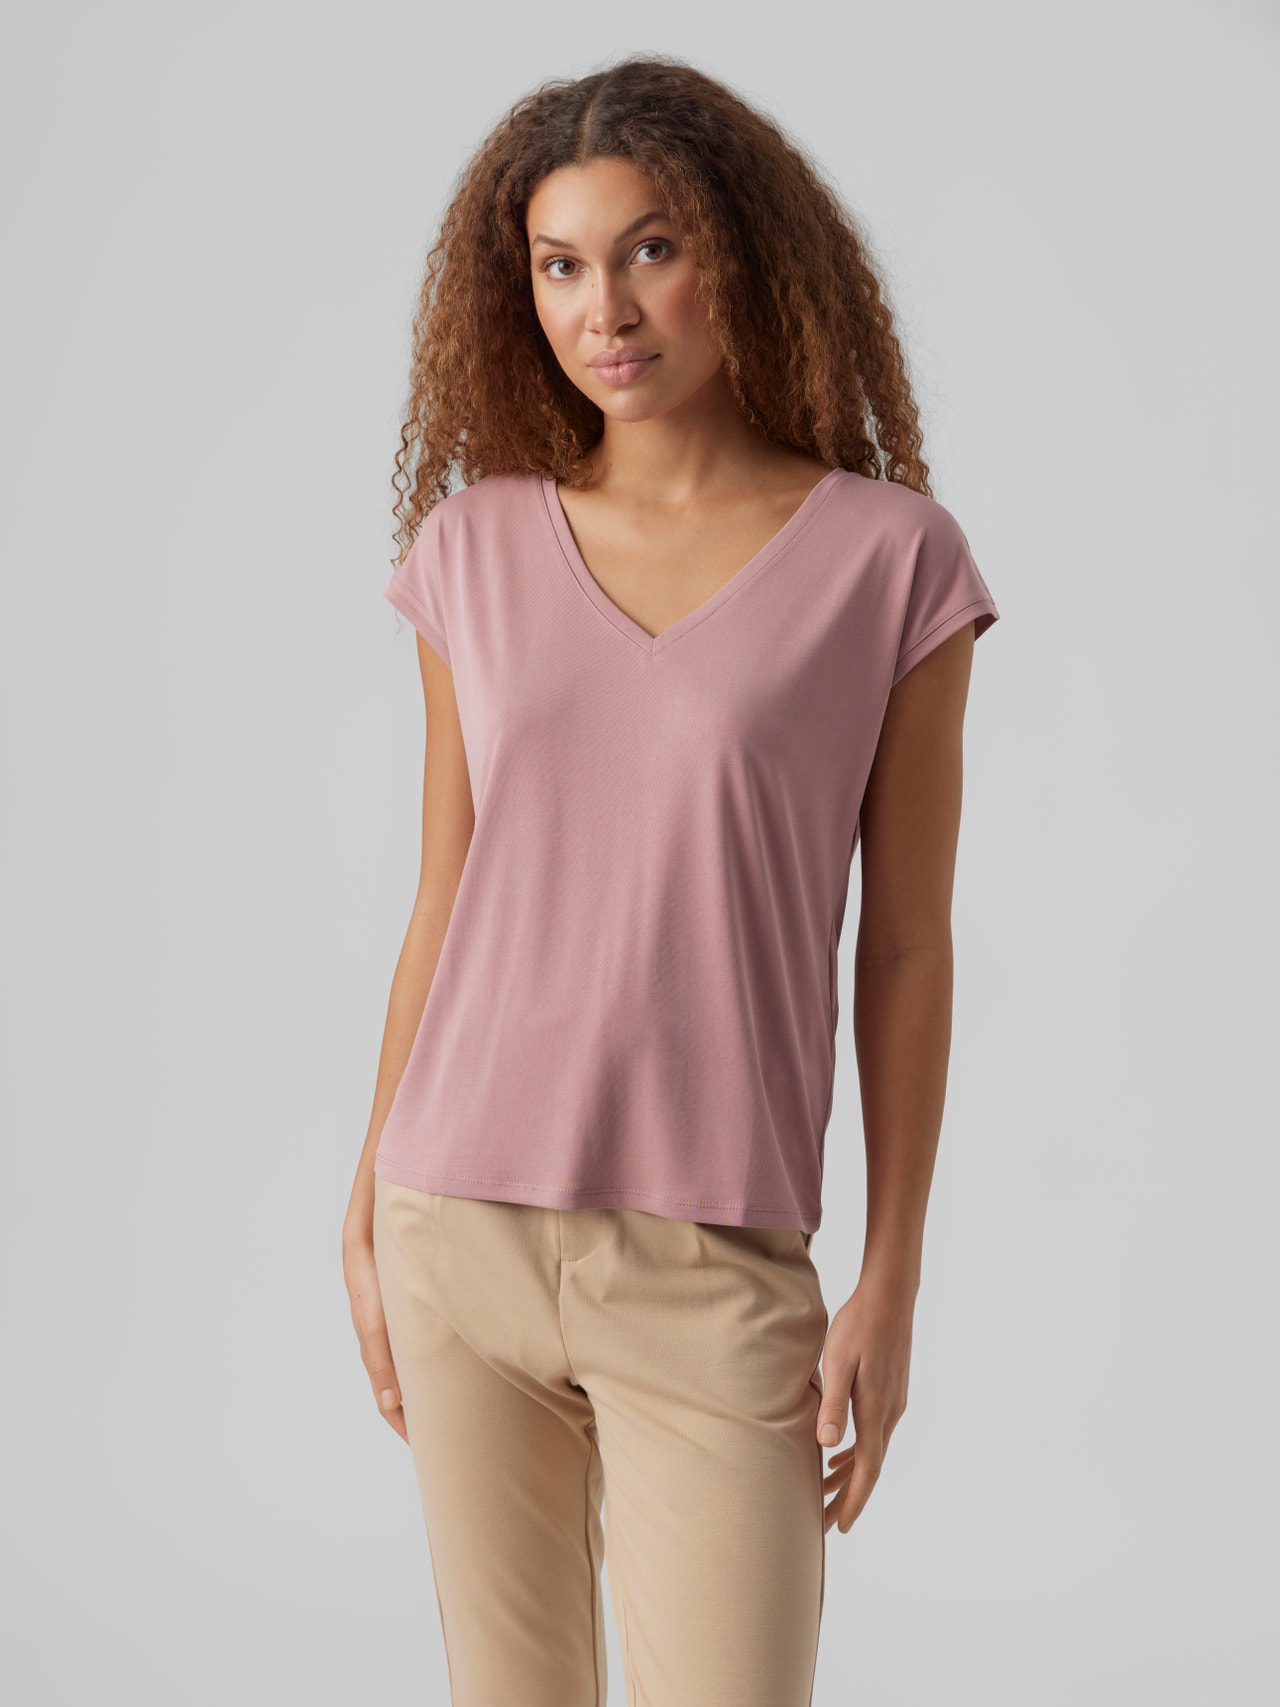 Vero Moda t-shirt in bright pink